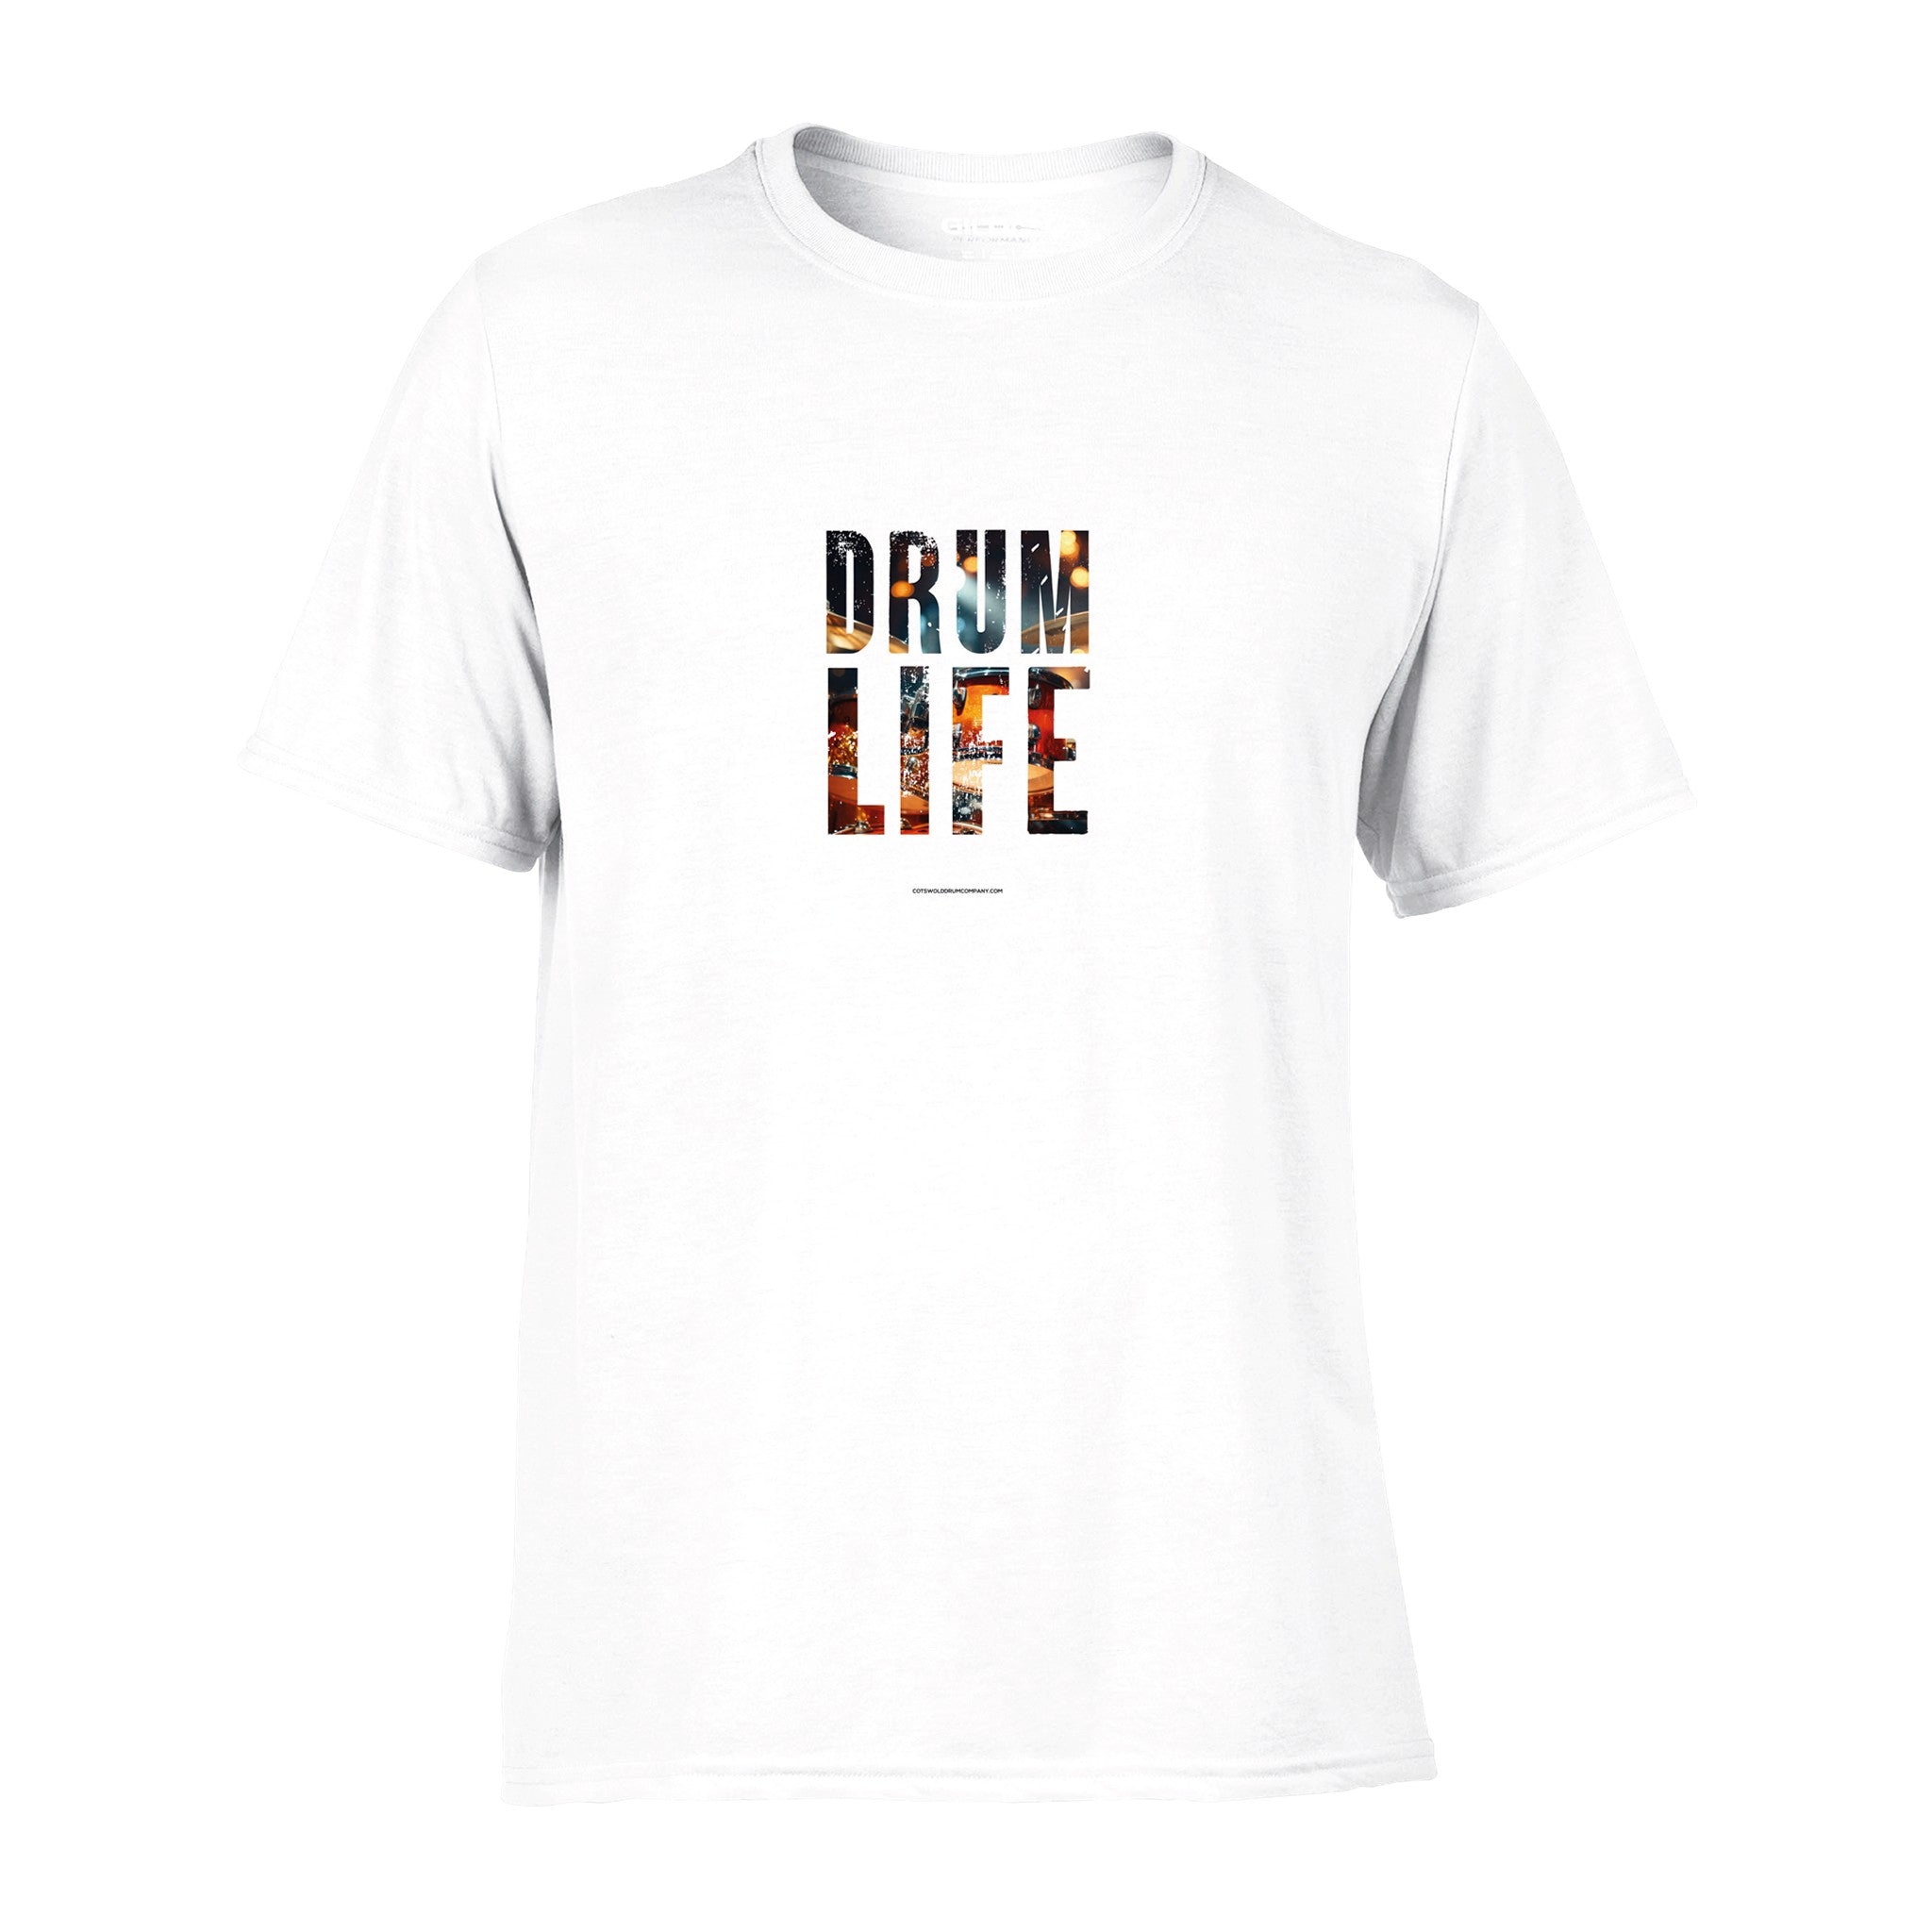 "DRUM LIFE" Unisex Crewneck T-shirt (white)